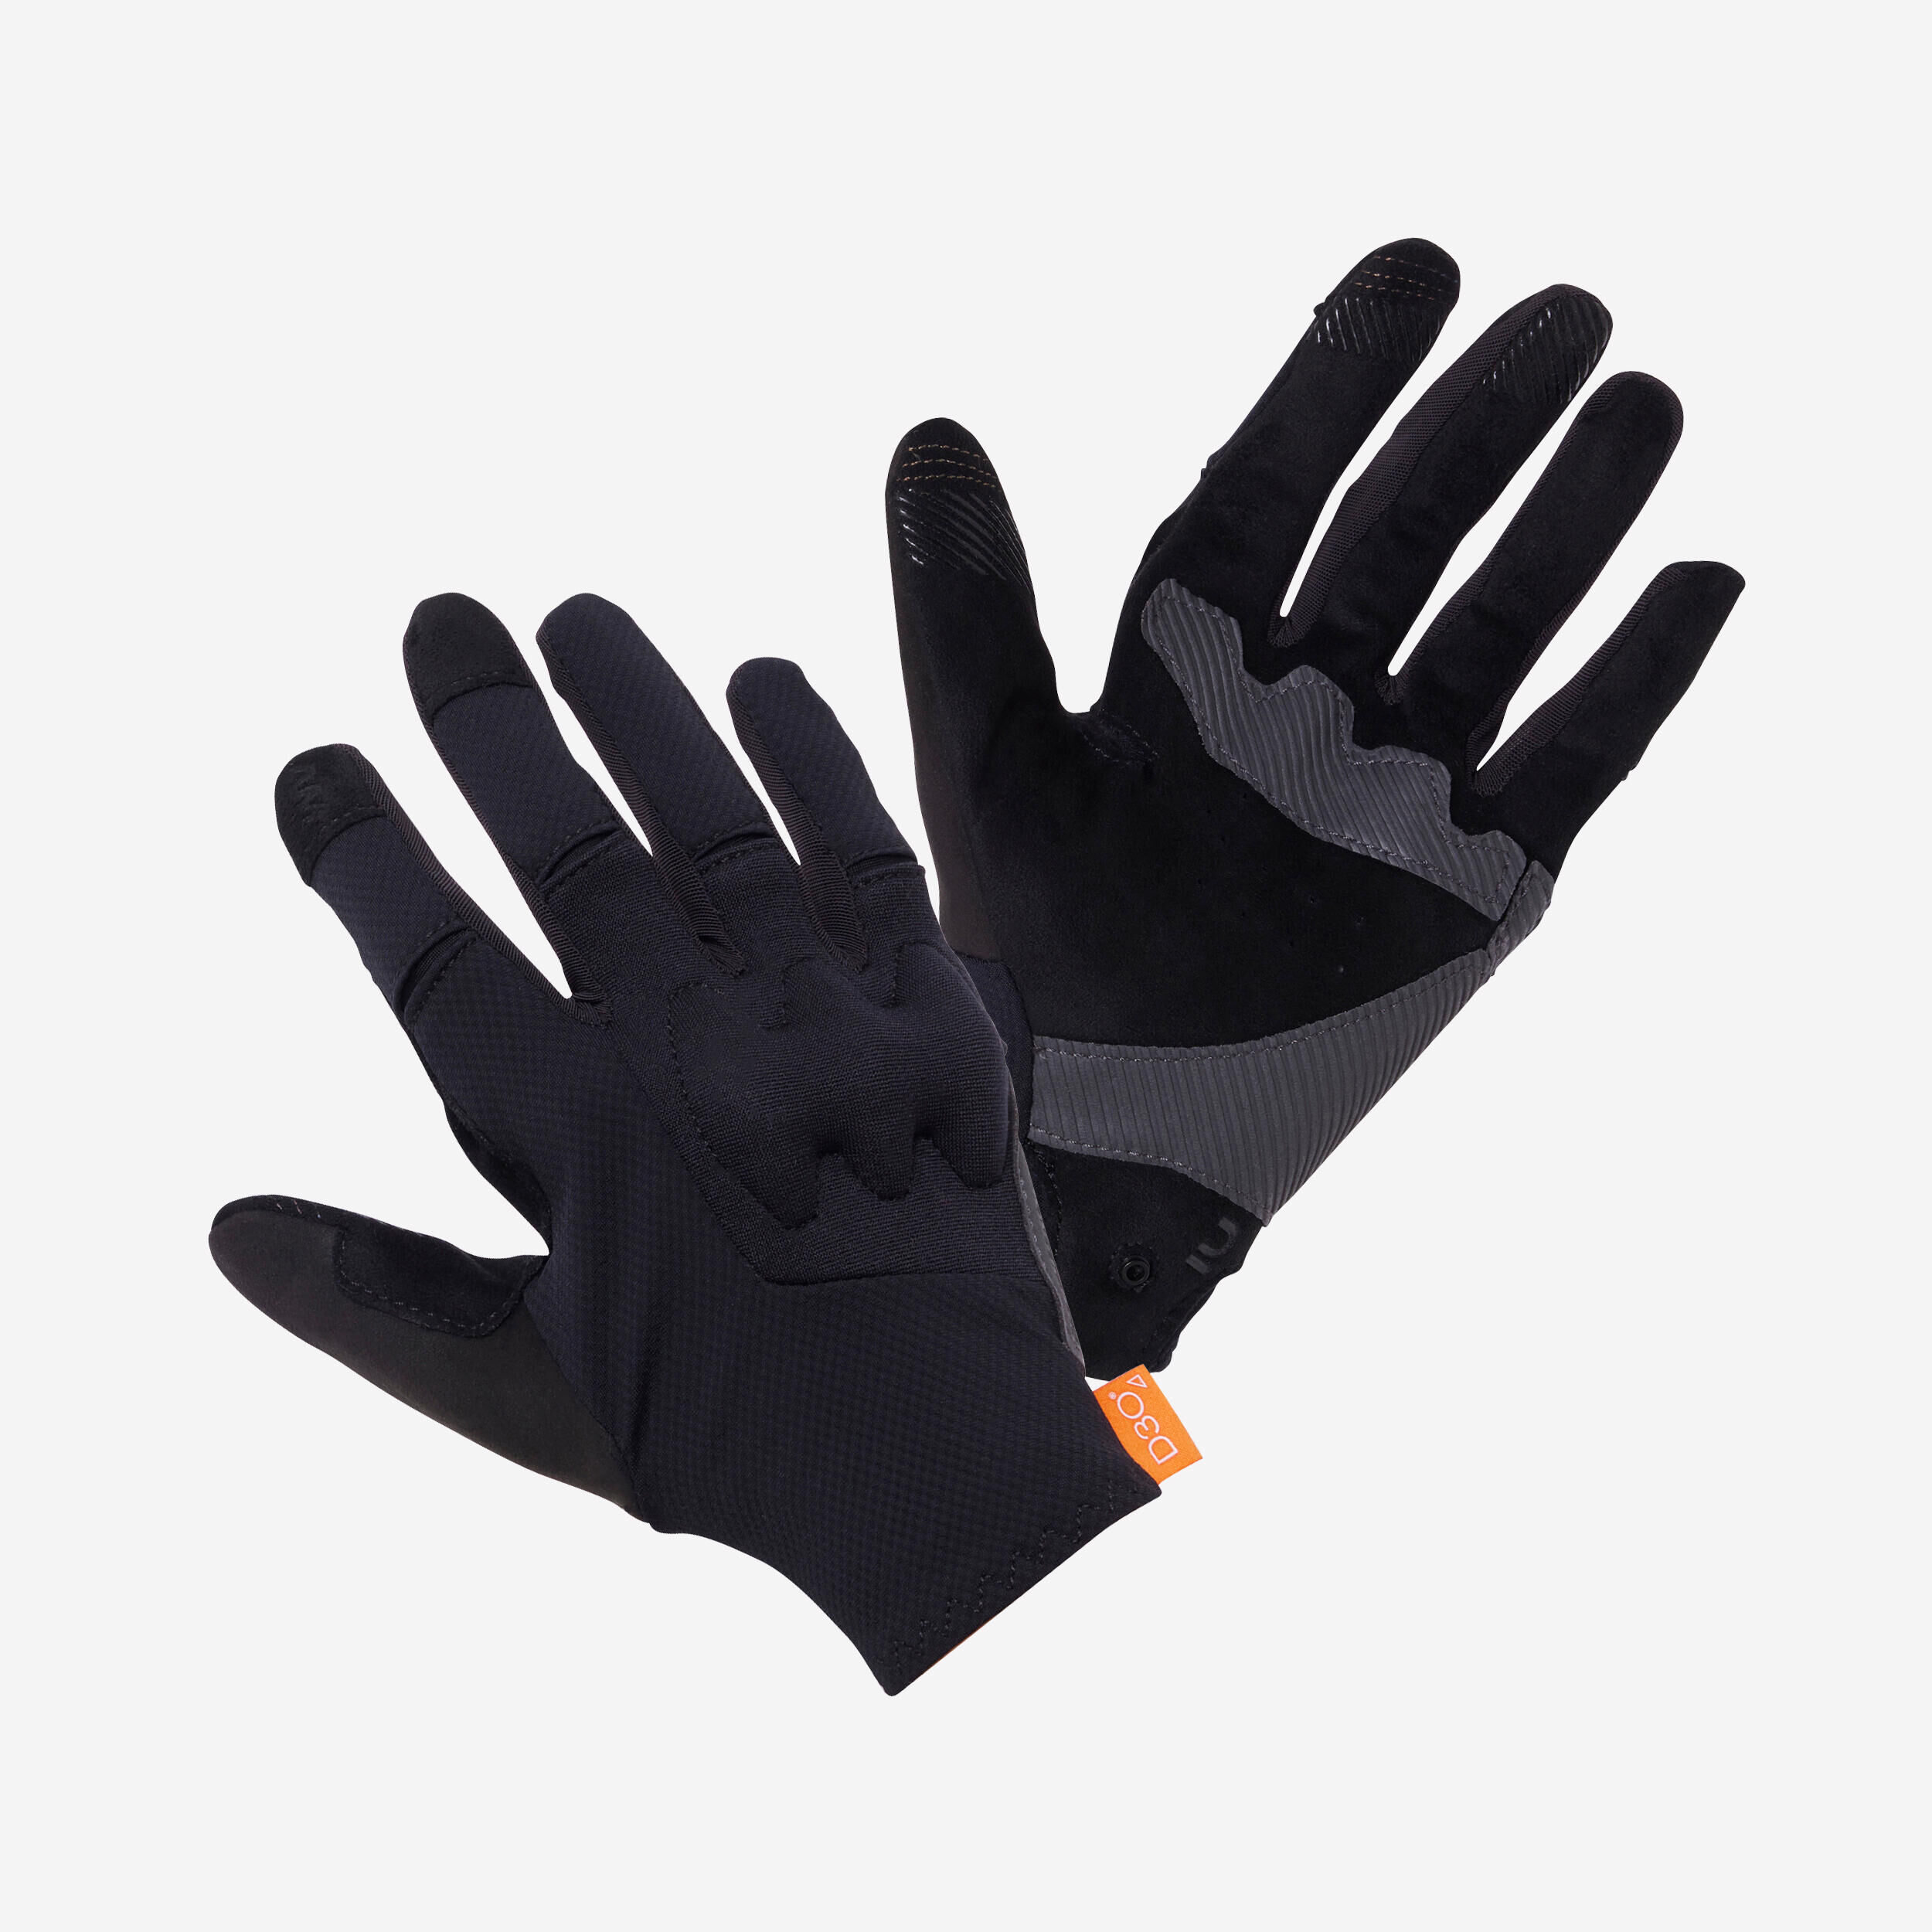 ROCKRIDER All Mountain Mountain Bike Gloves - Black